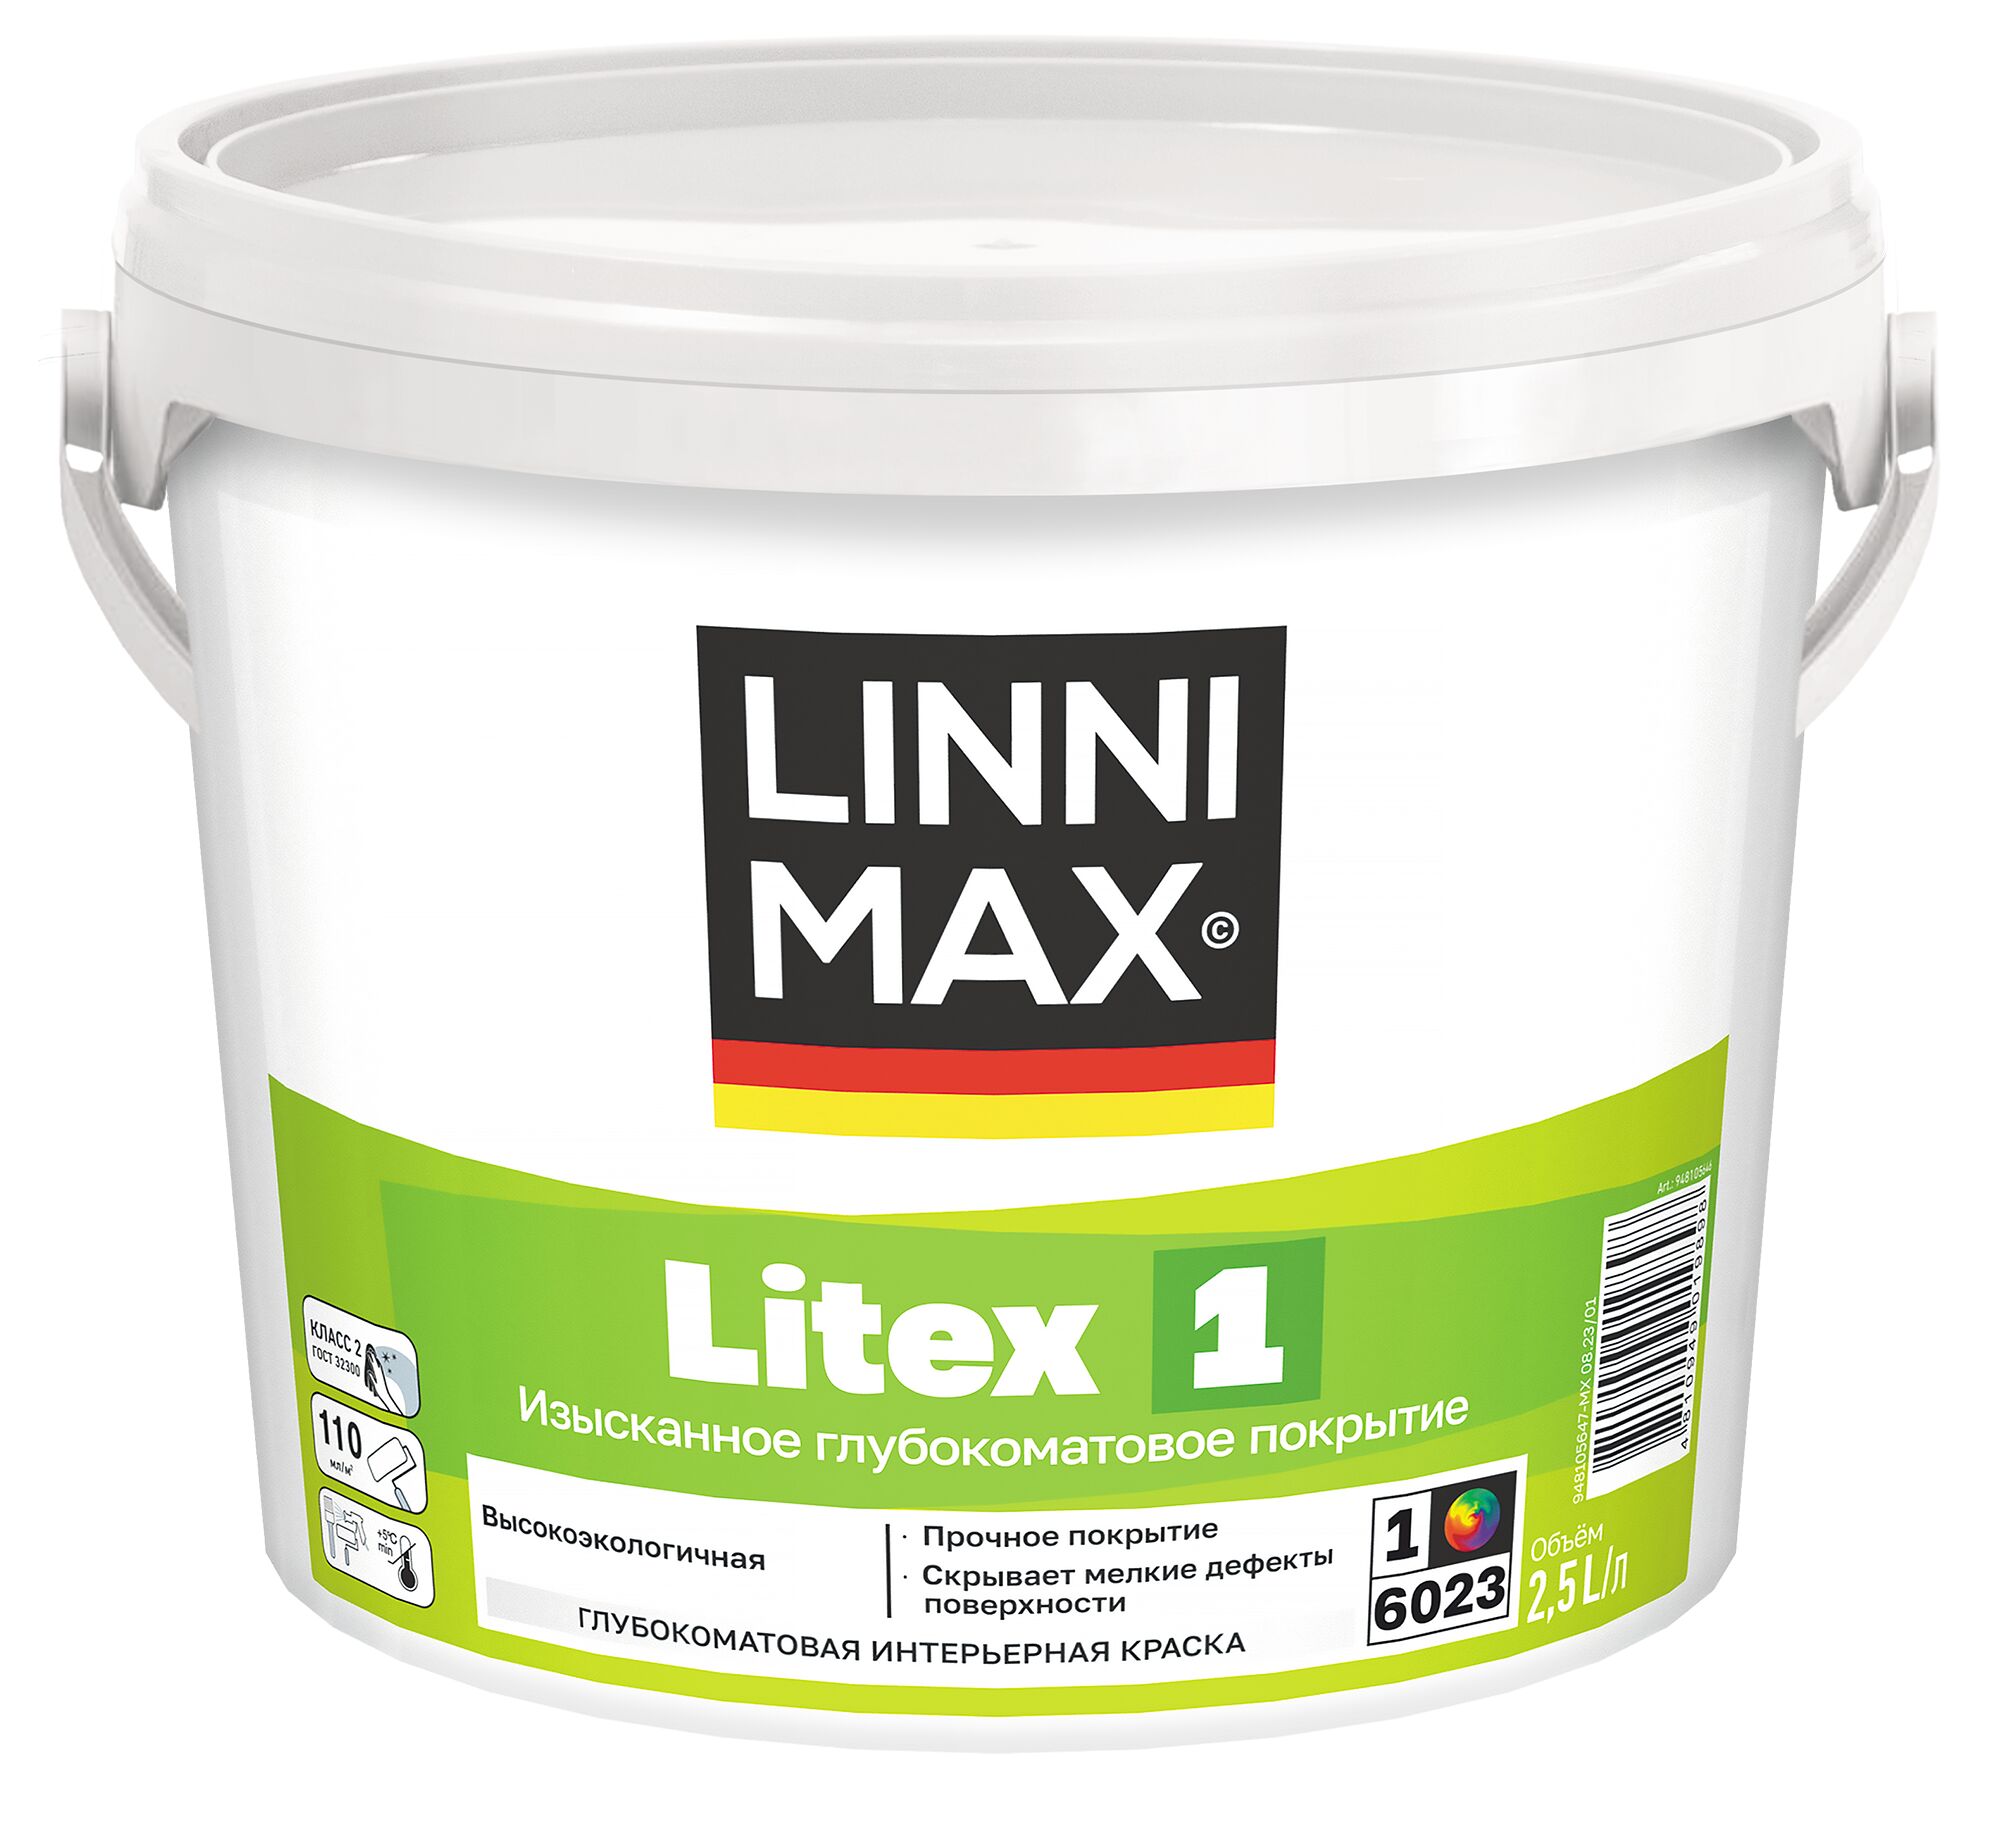 Litex 1 2,5л Краска водно-дисперсионная для внутренних работ База1 LINNIMAX, Litex 1 2,5л Краска водно-дисперсионная для внутренних работ База1 LINNIMAX